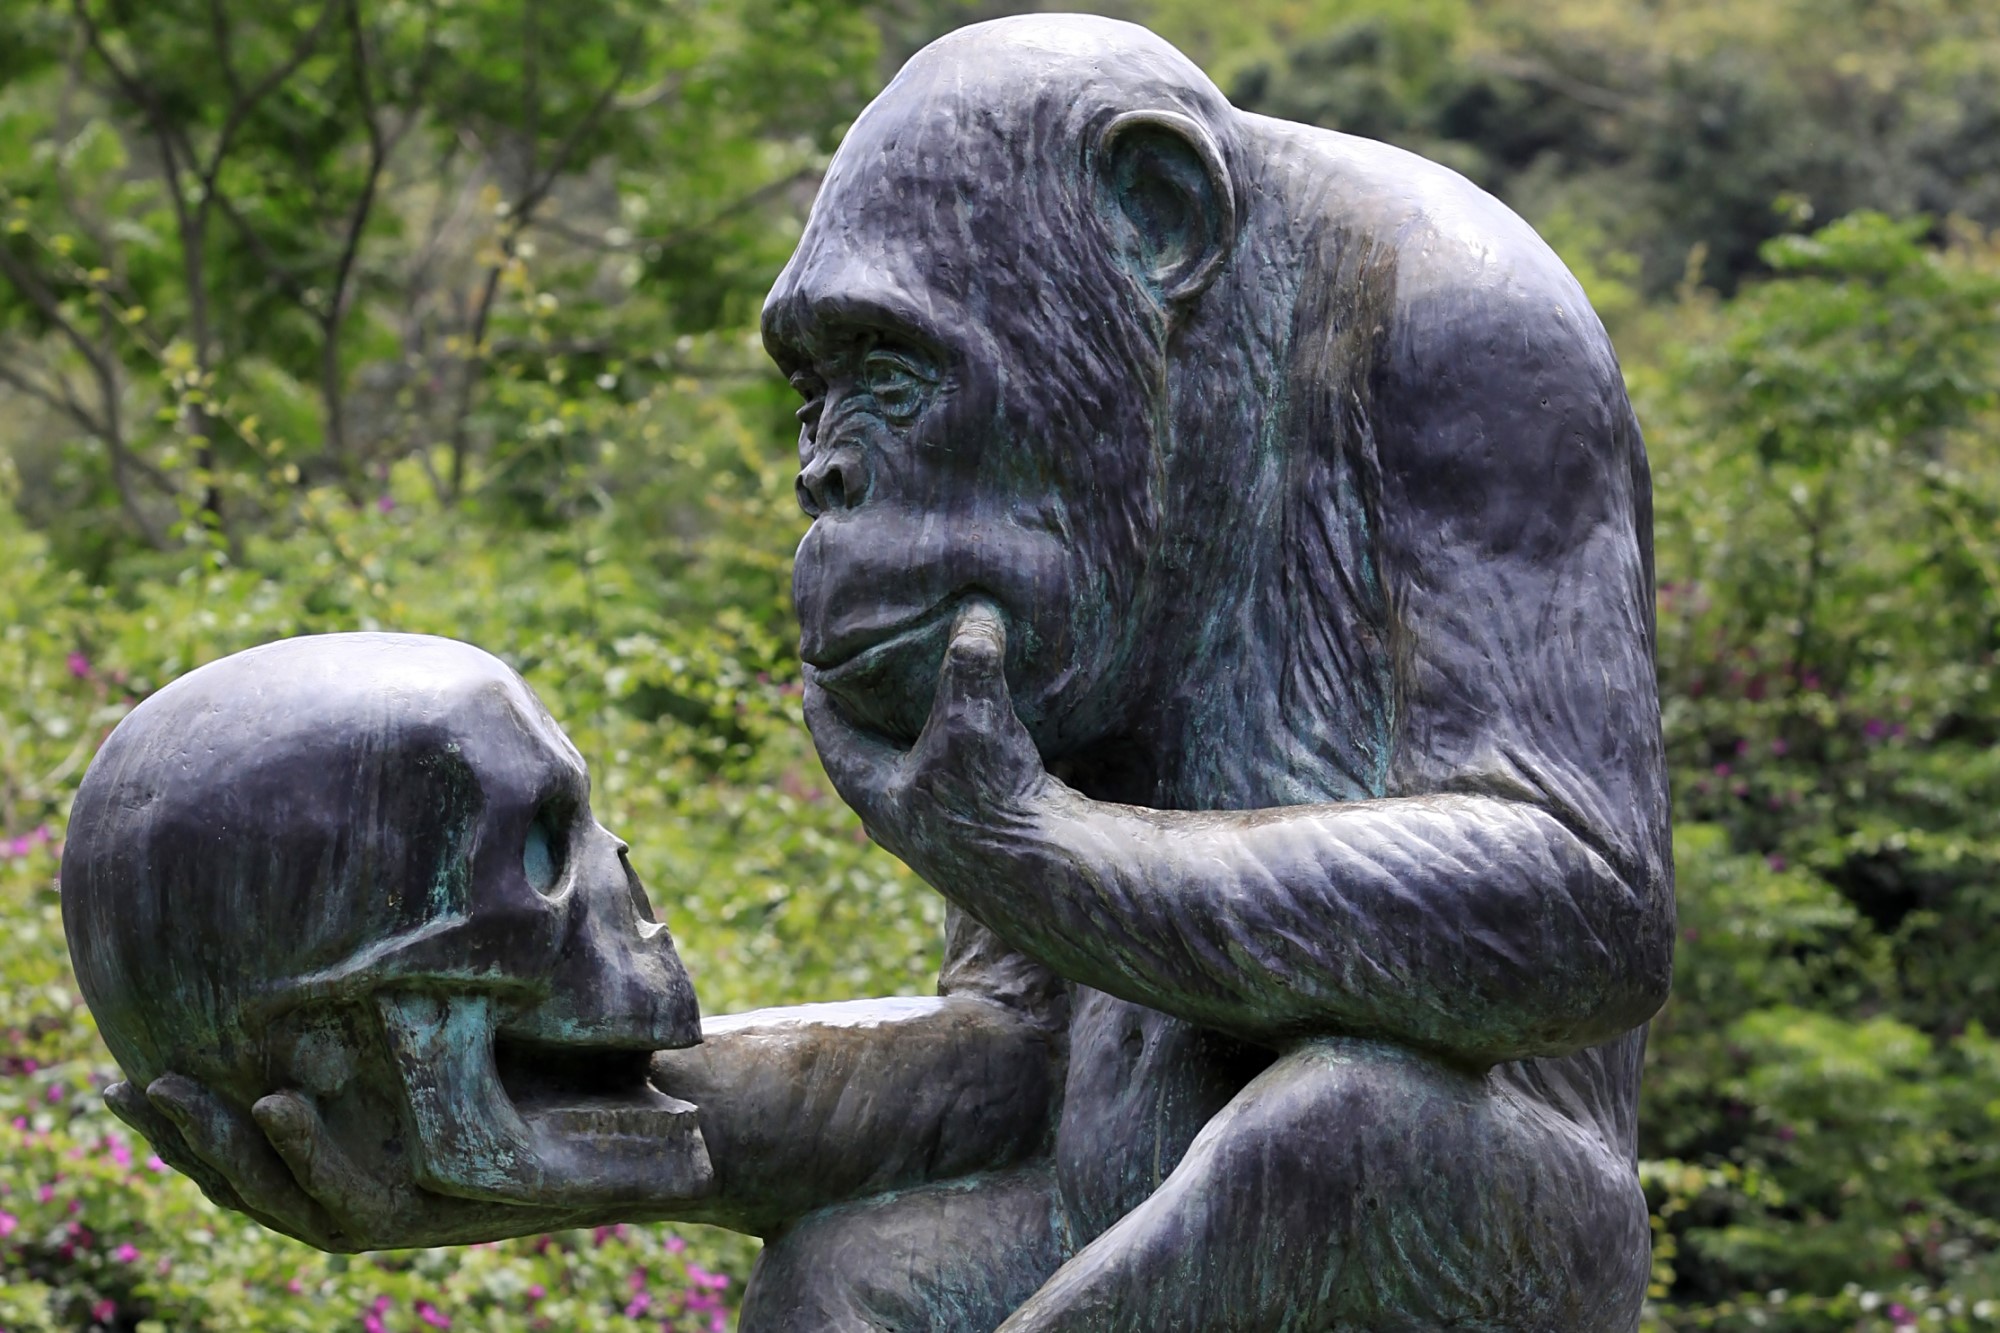 photograph of statue of gorilla contemplating a human skull